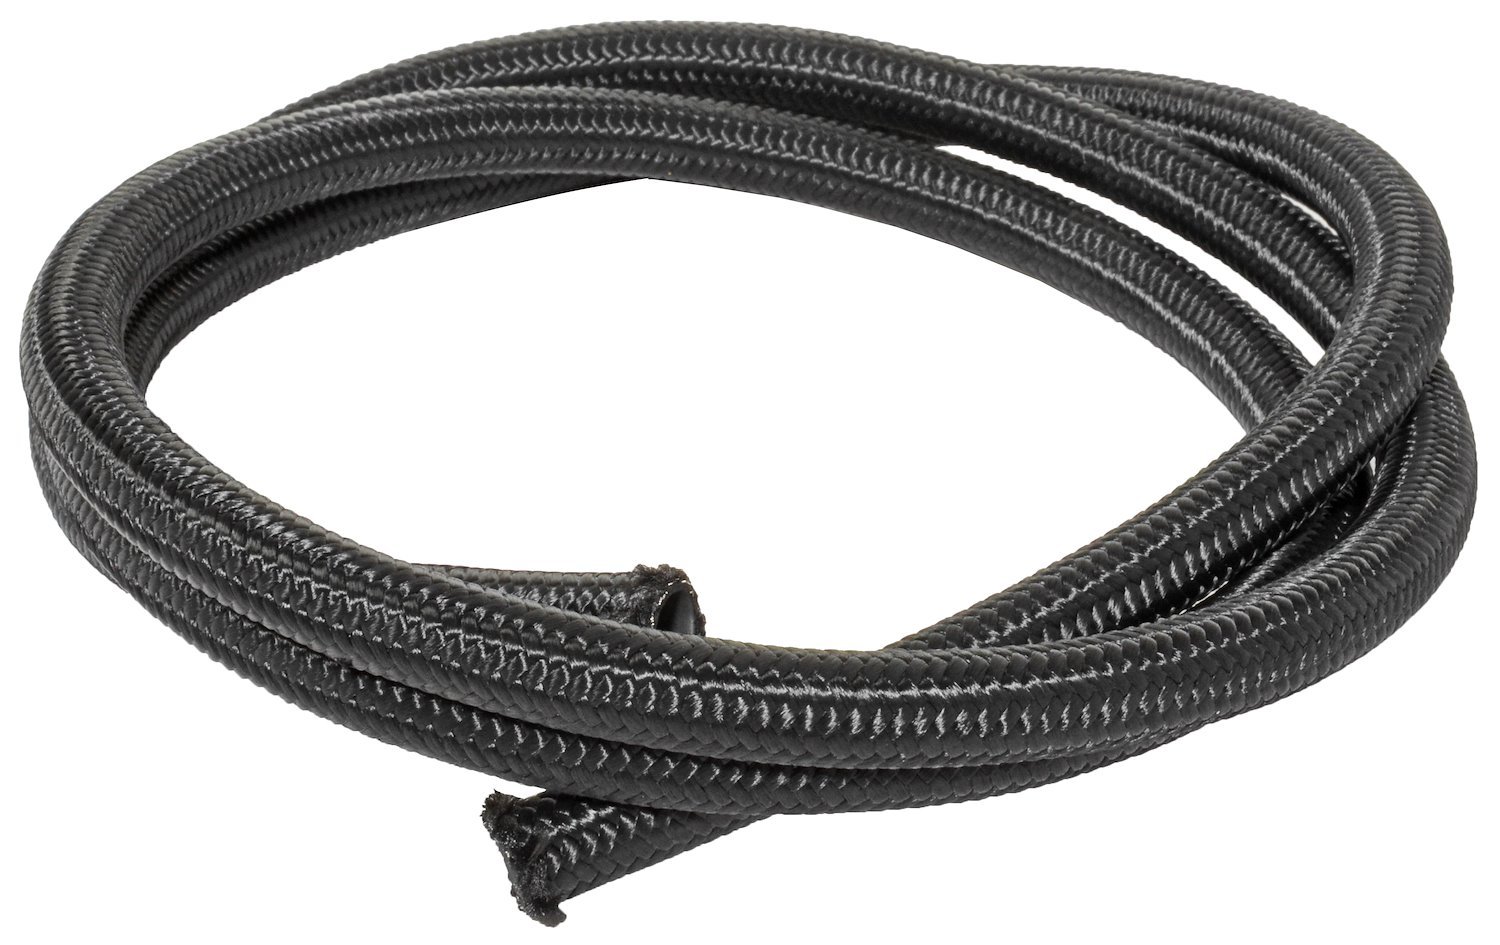 Pro-Flo 350 Black Nylon Braided Hose [-6 AN, 6 ft]